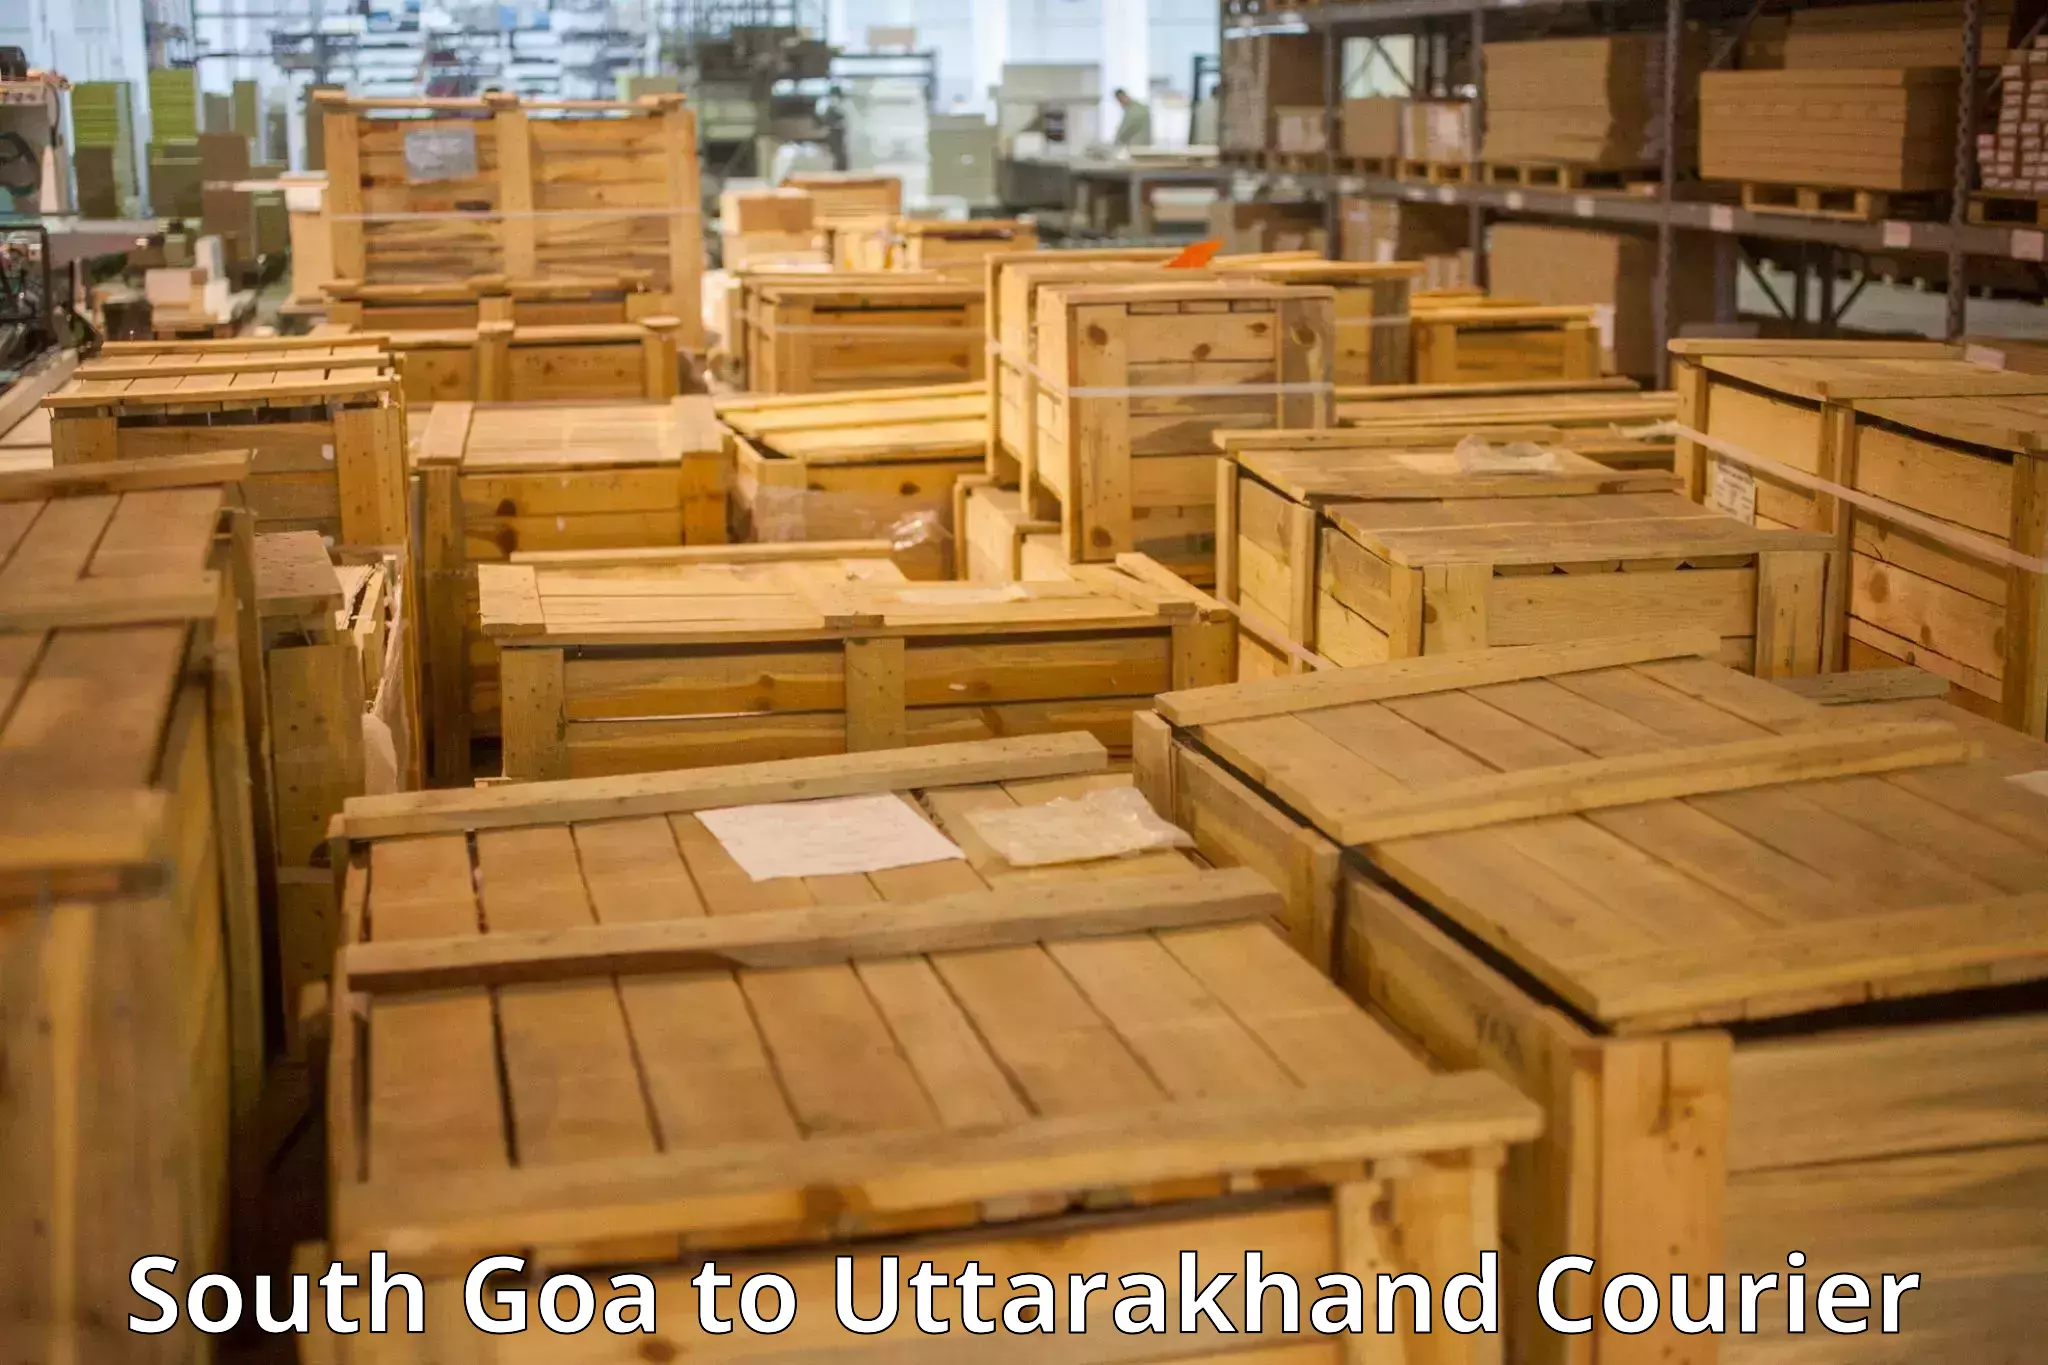 Luggage shipment tracking in South Goa to Rishikesh